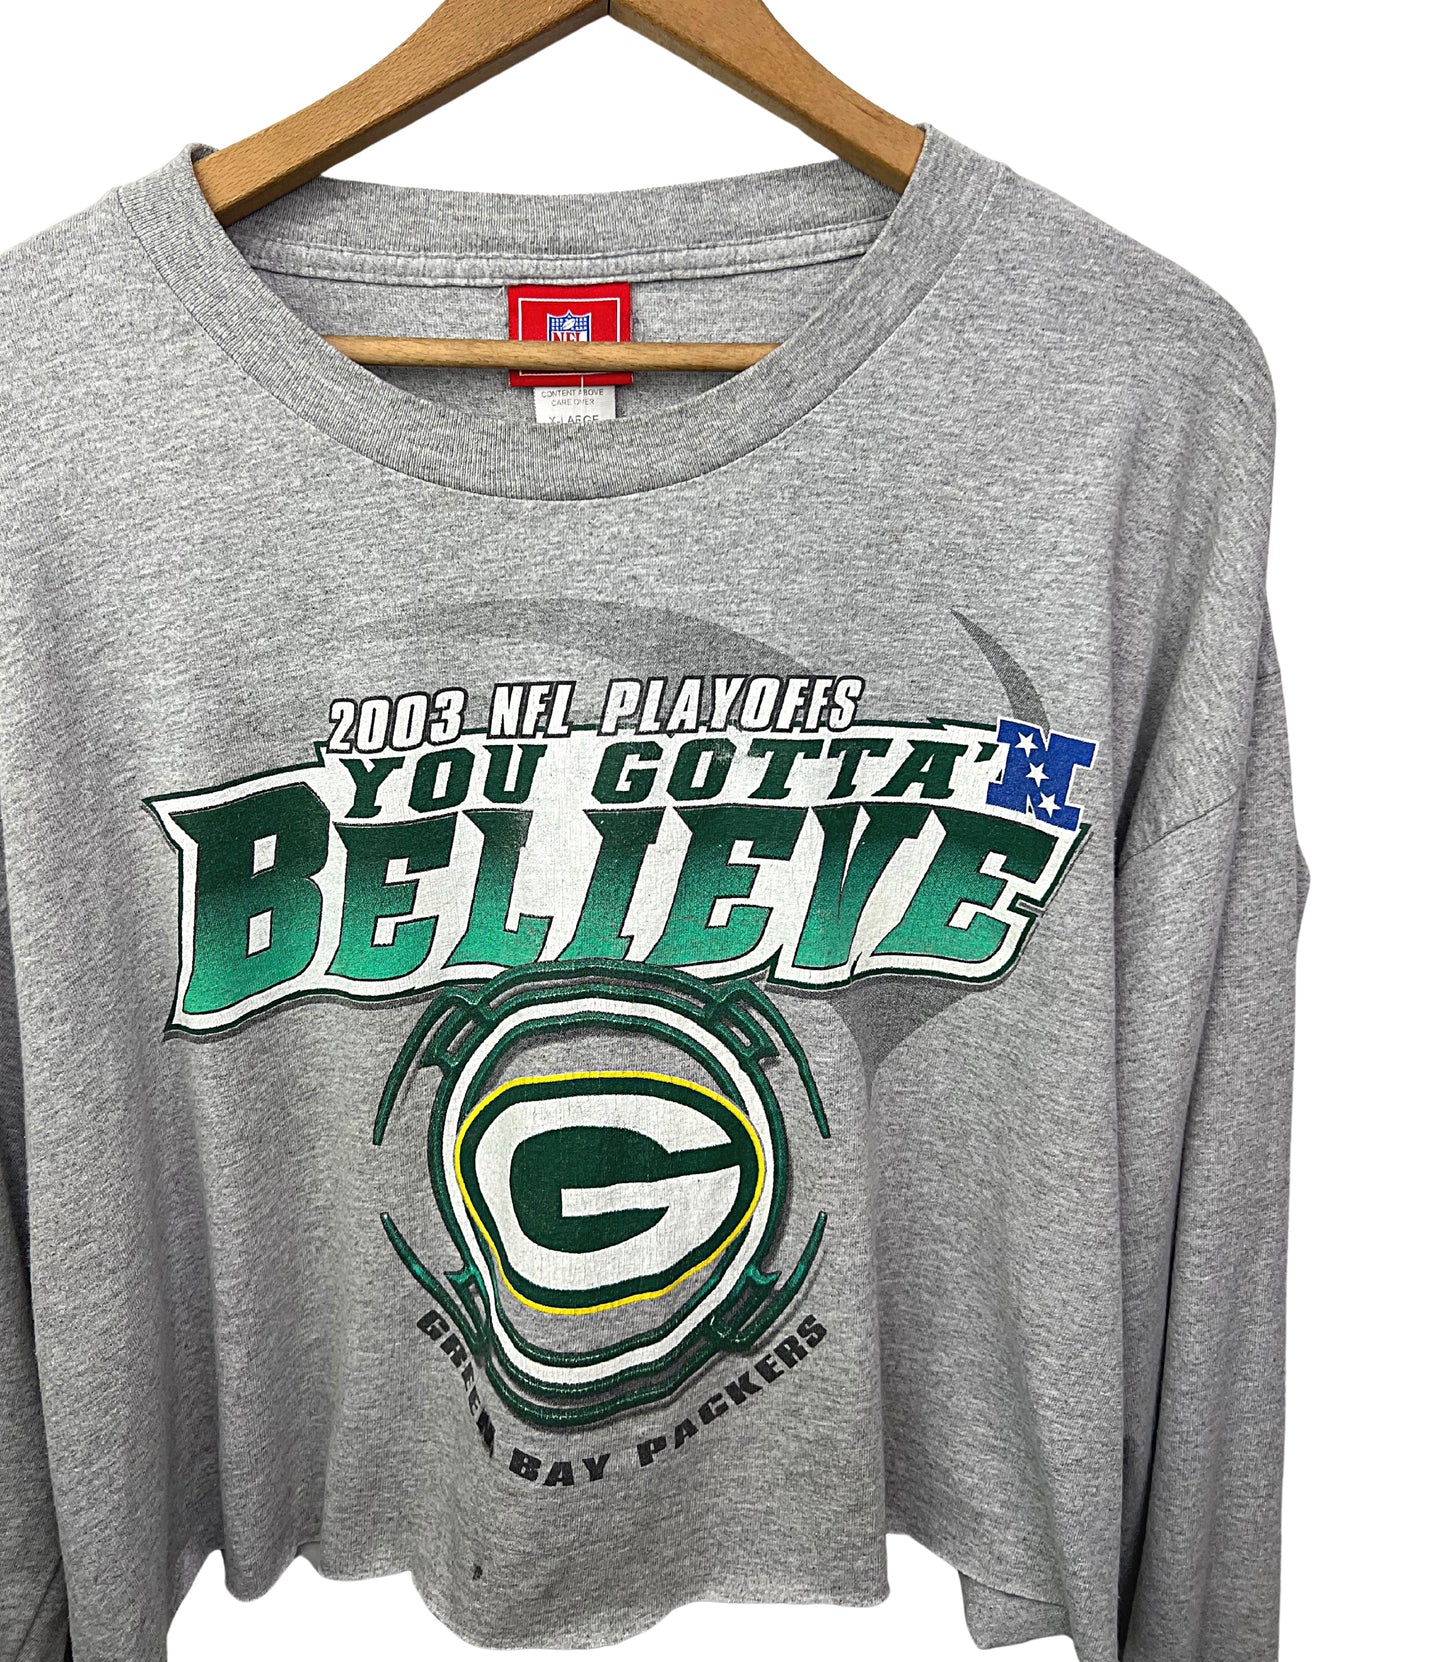 2003 You Gotta Believe Green Bay Packers NFL Football Cutoff Crop Top Size XL